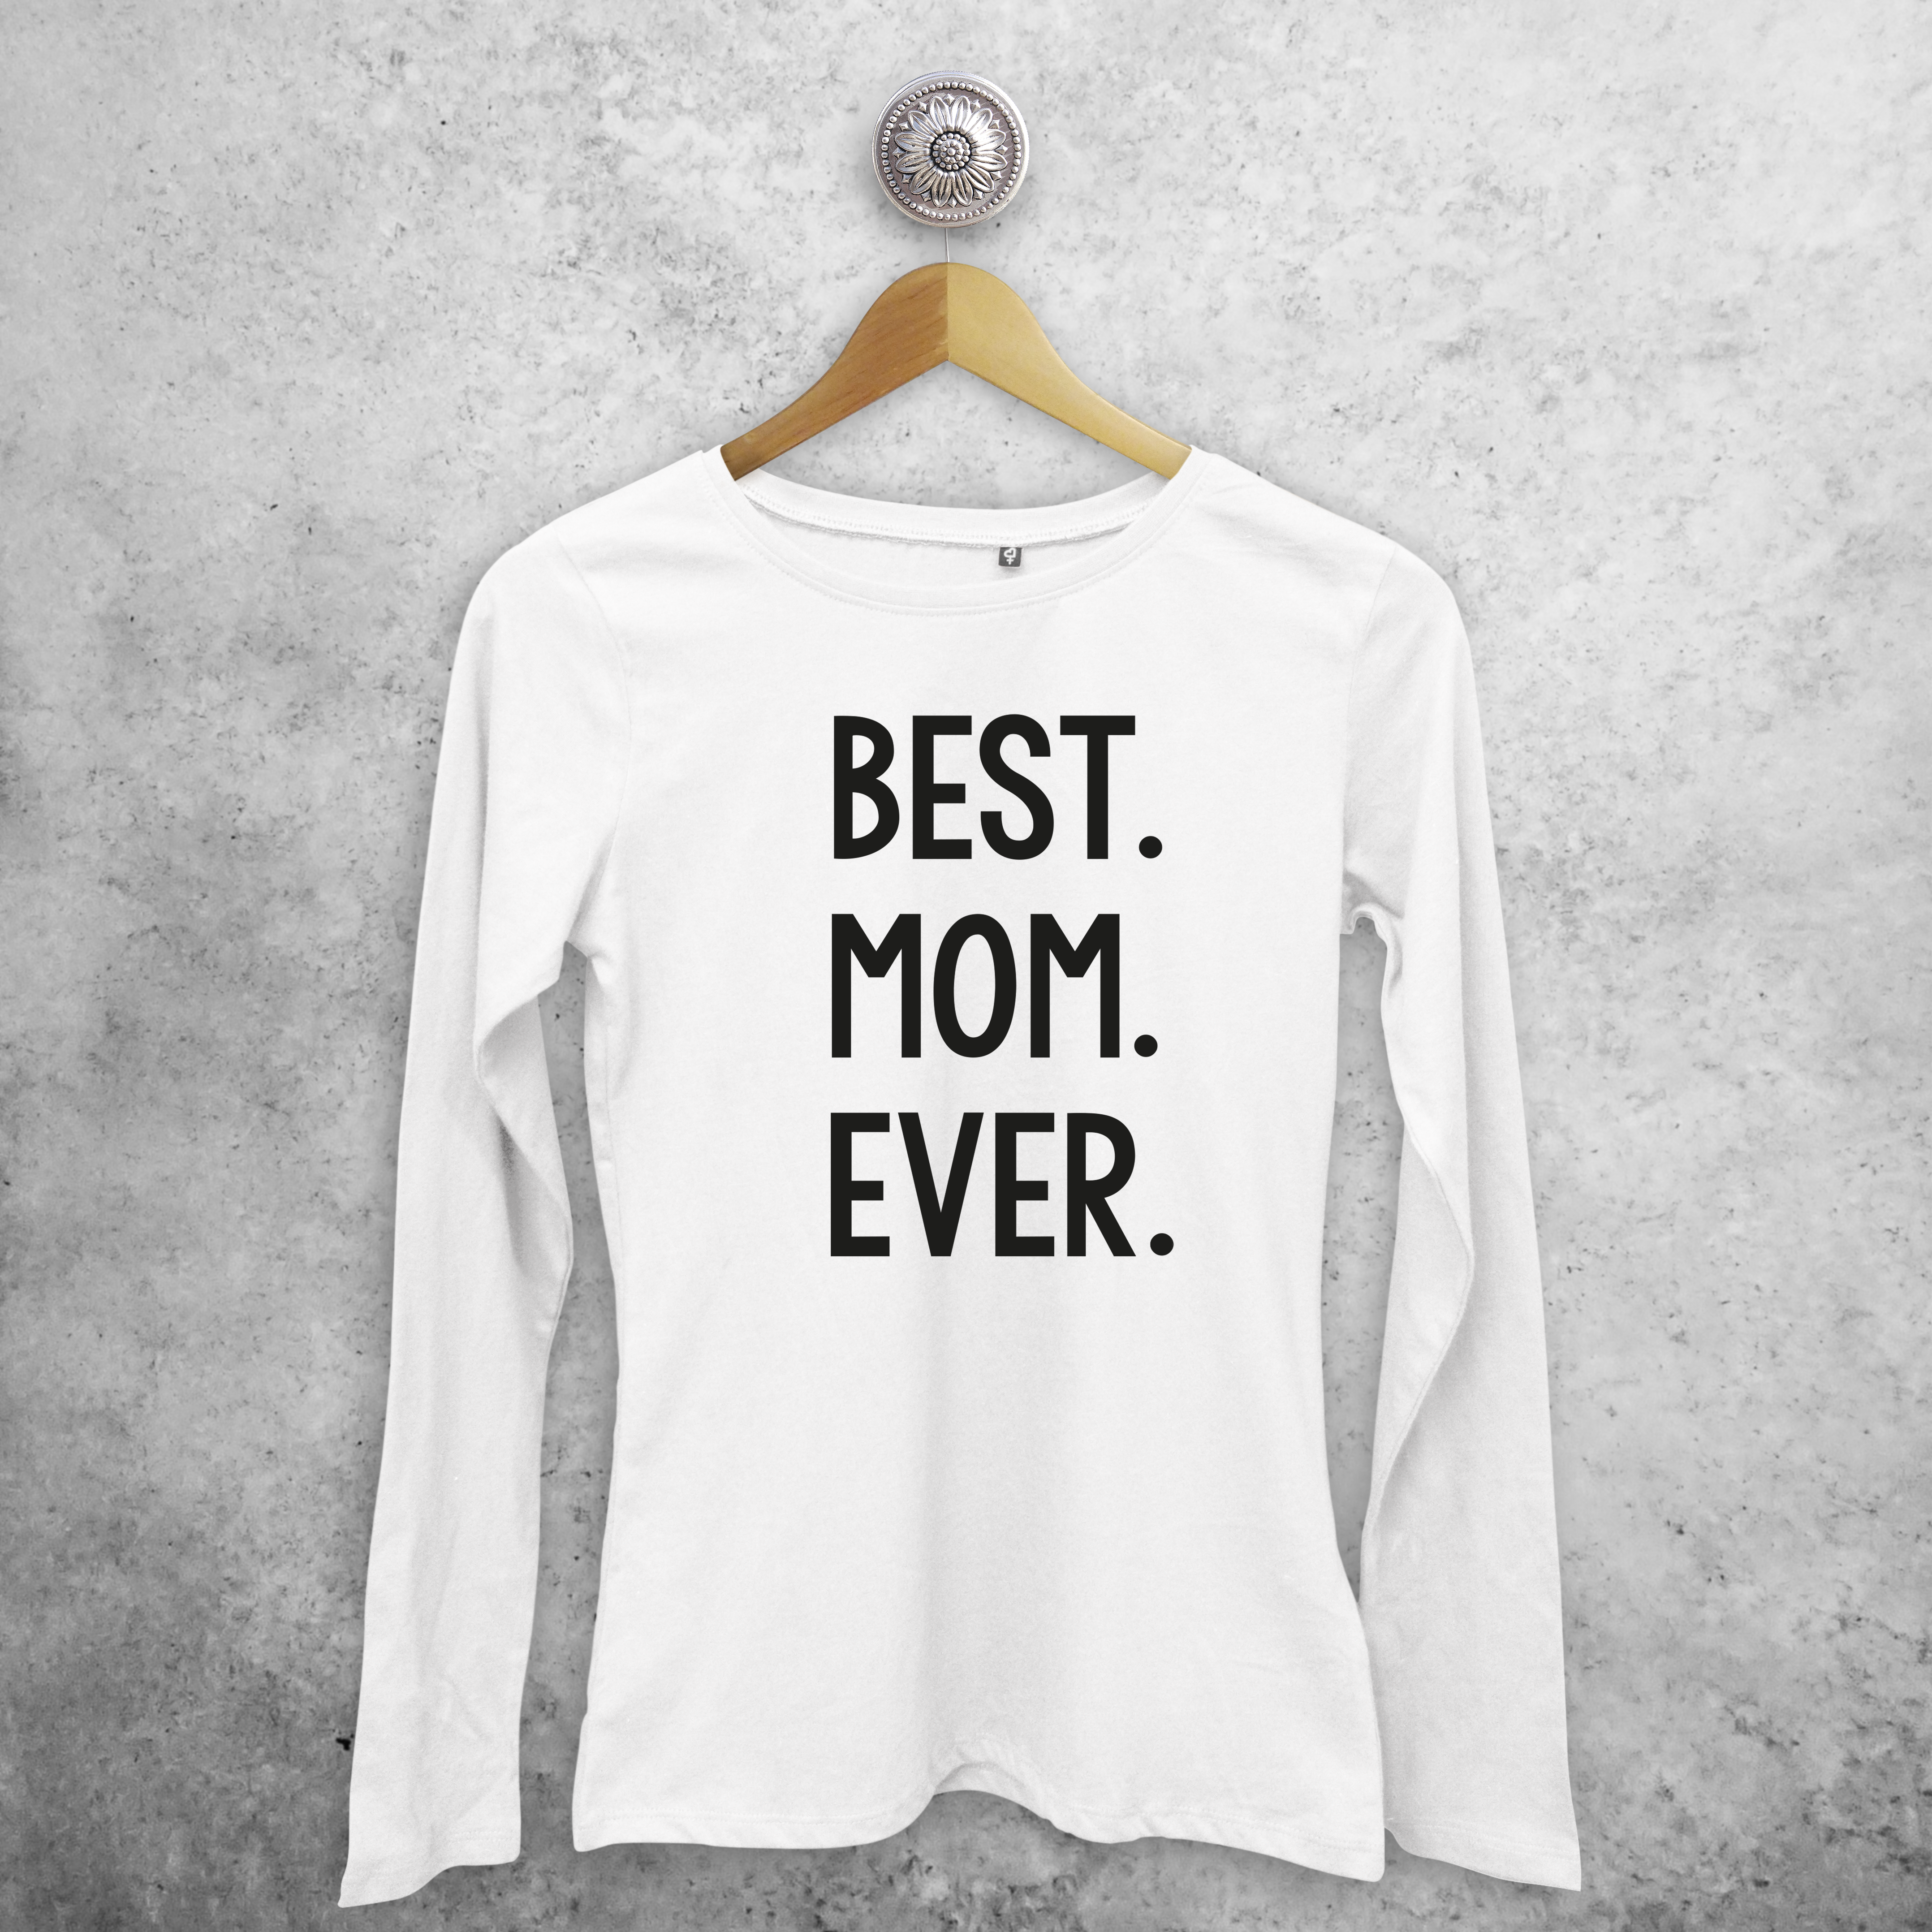 'Best. Mom. Ever.' adult longsleeve shirt